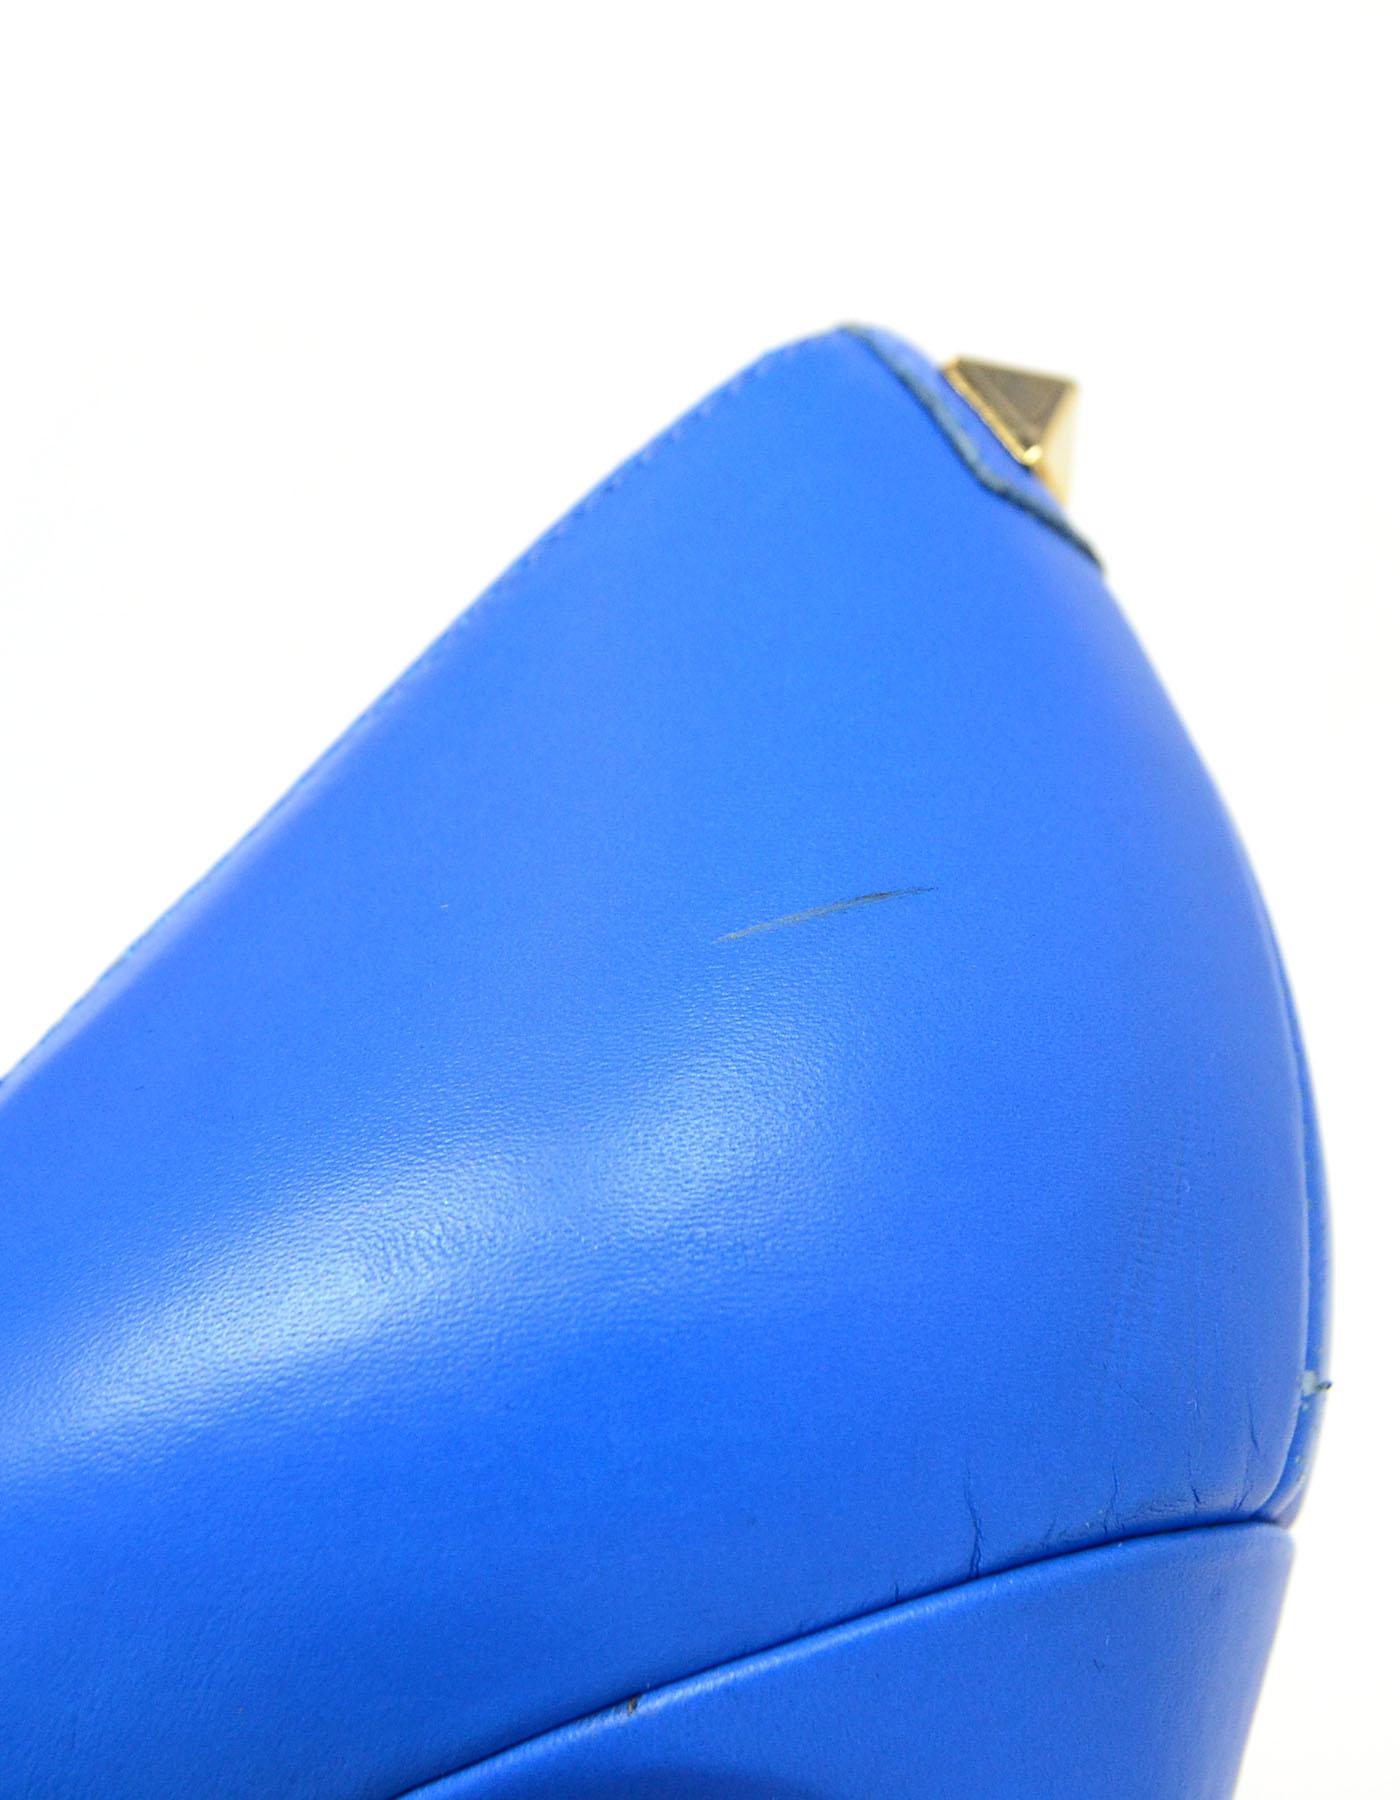  Valentino Blue Leather New Plain 100mm Pumps Sz 38 3